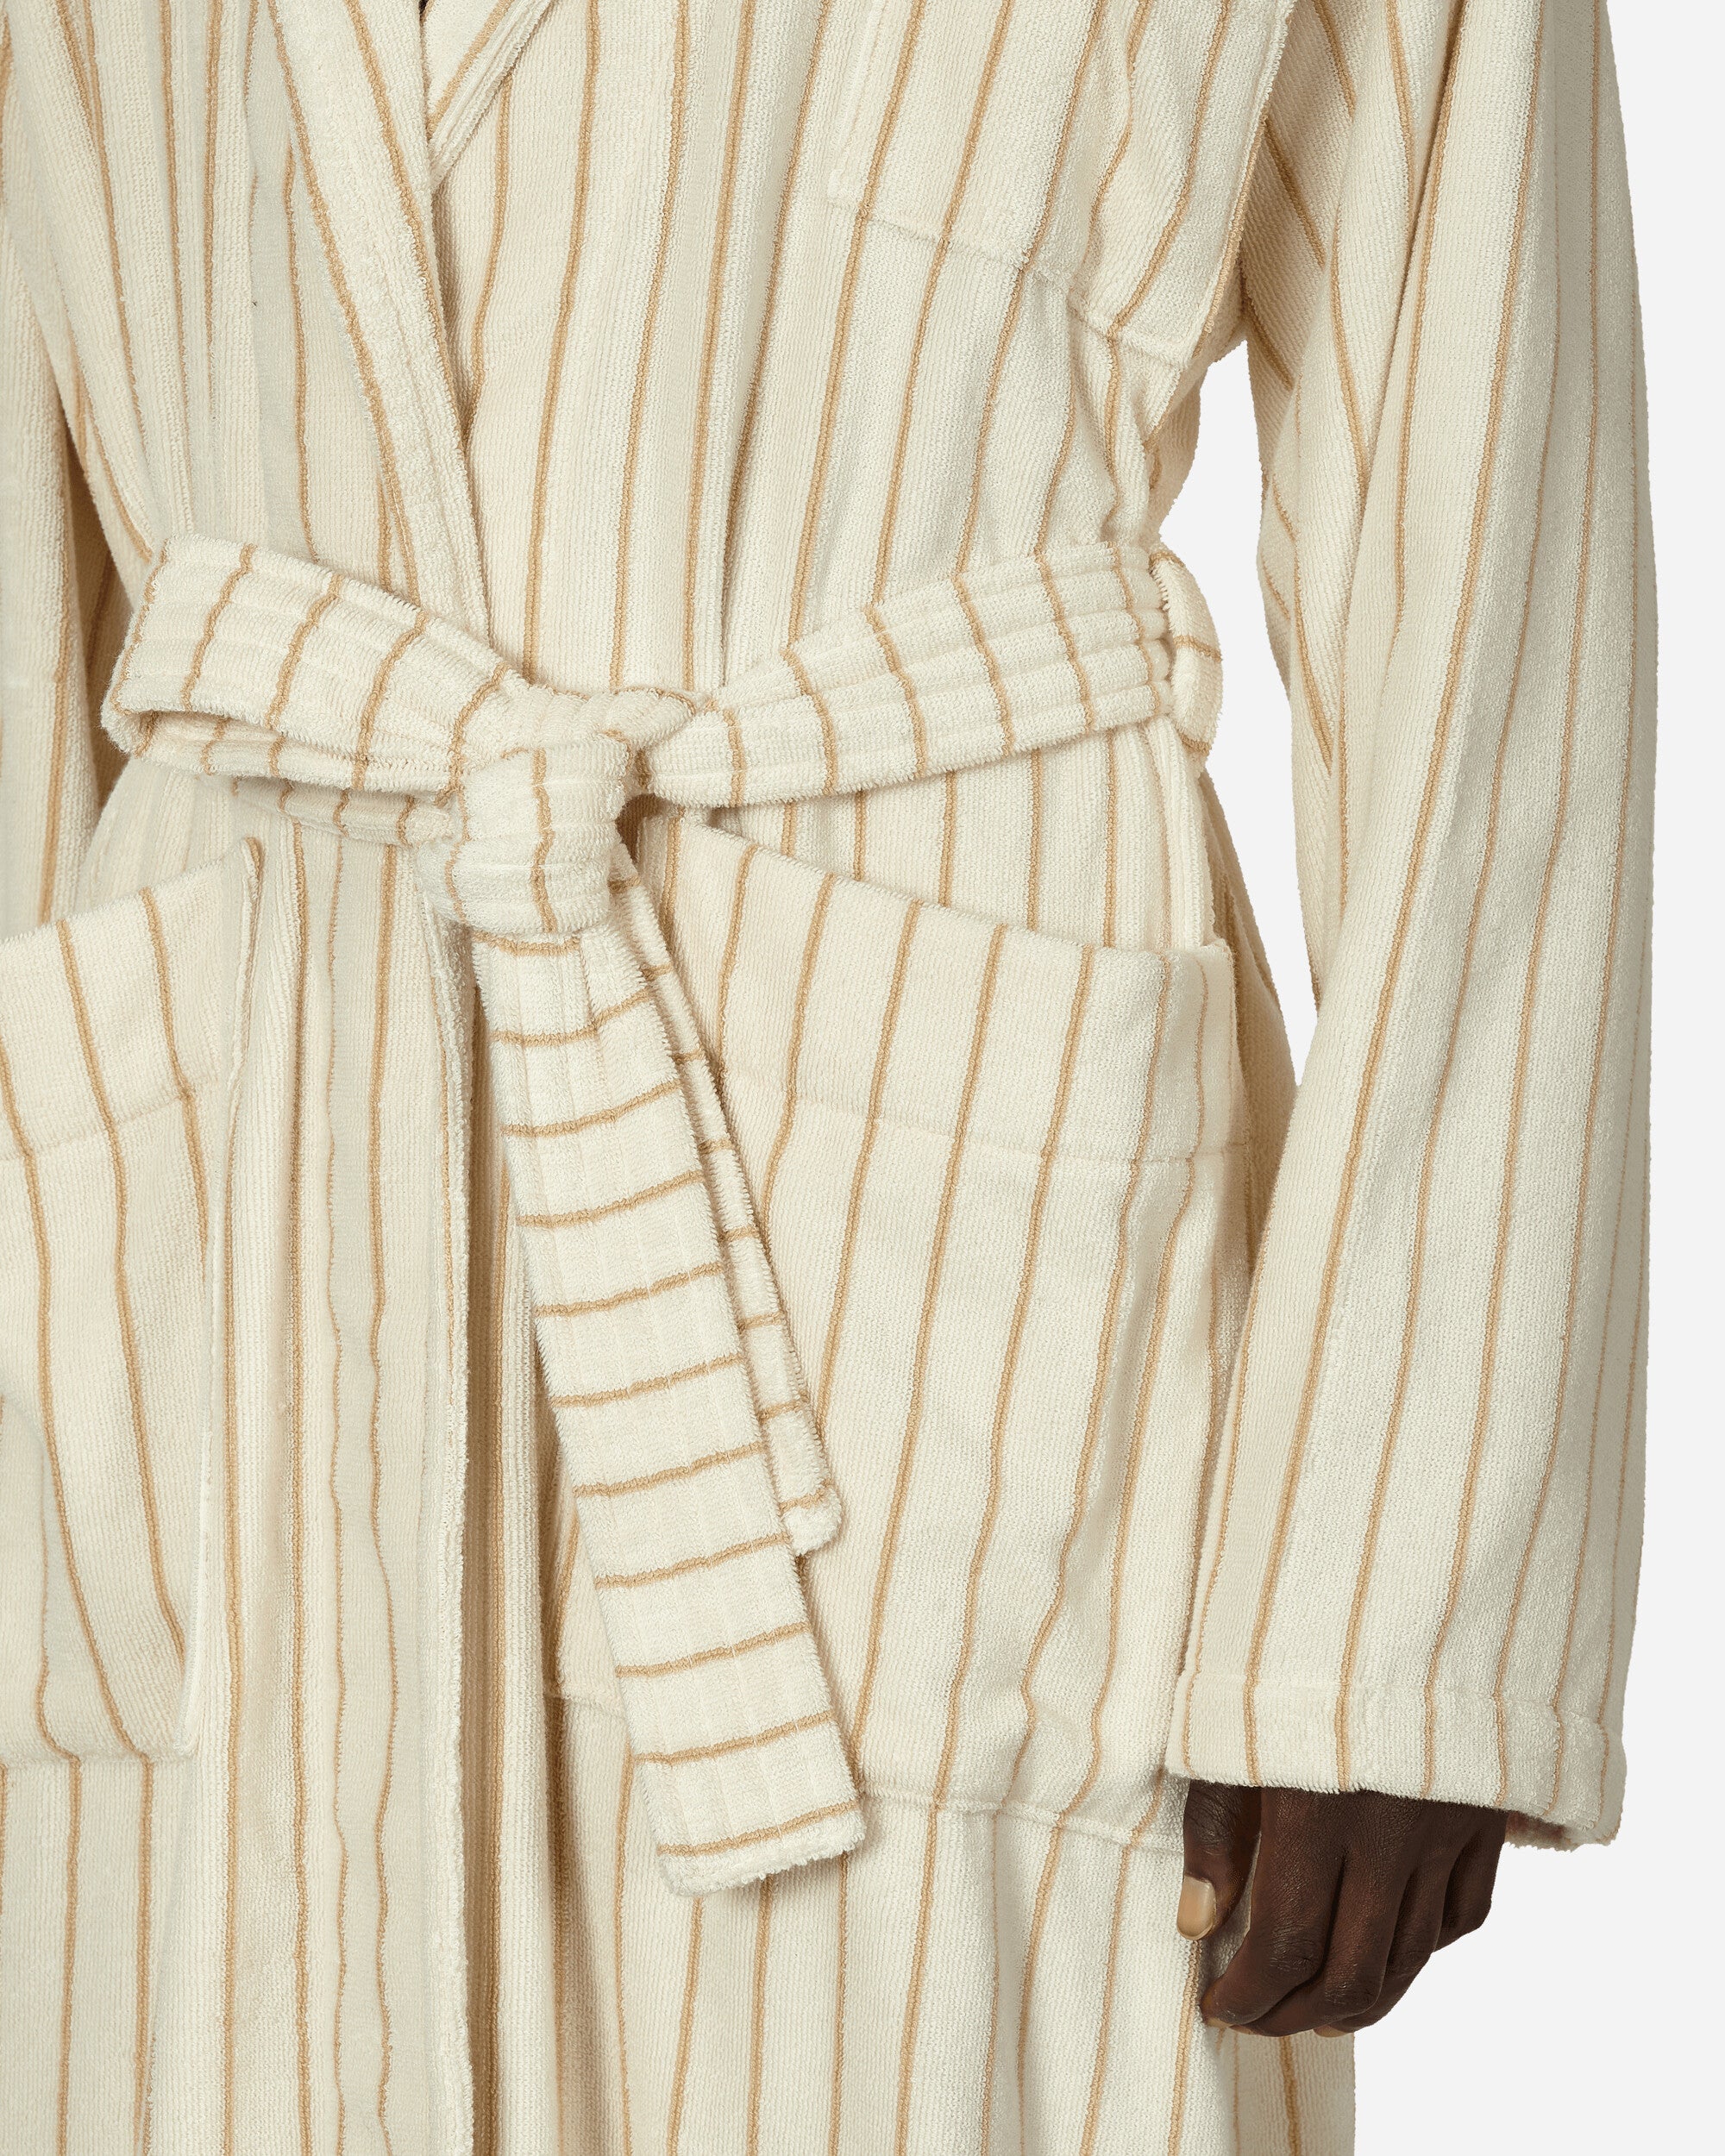 Tekla Classic Bathrobe - Striped Sienna Stripes Textile Bathrobes CB-SNS SNS